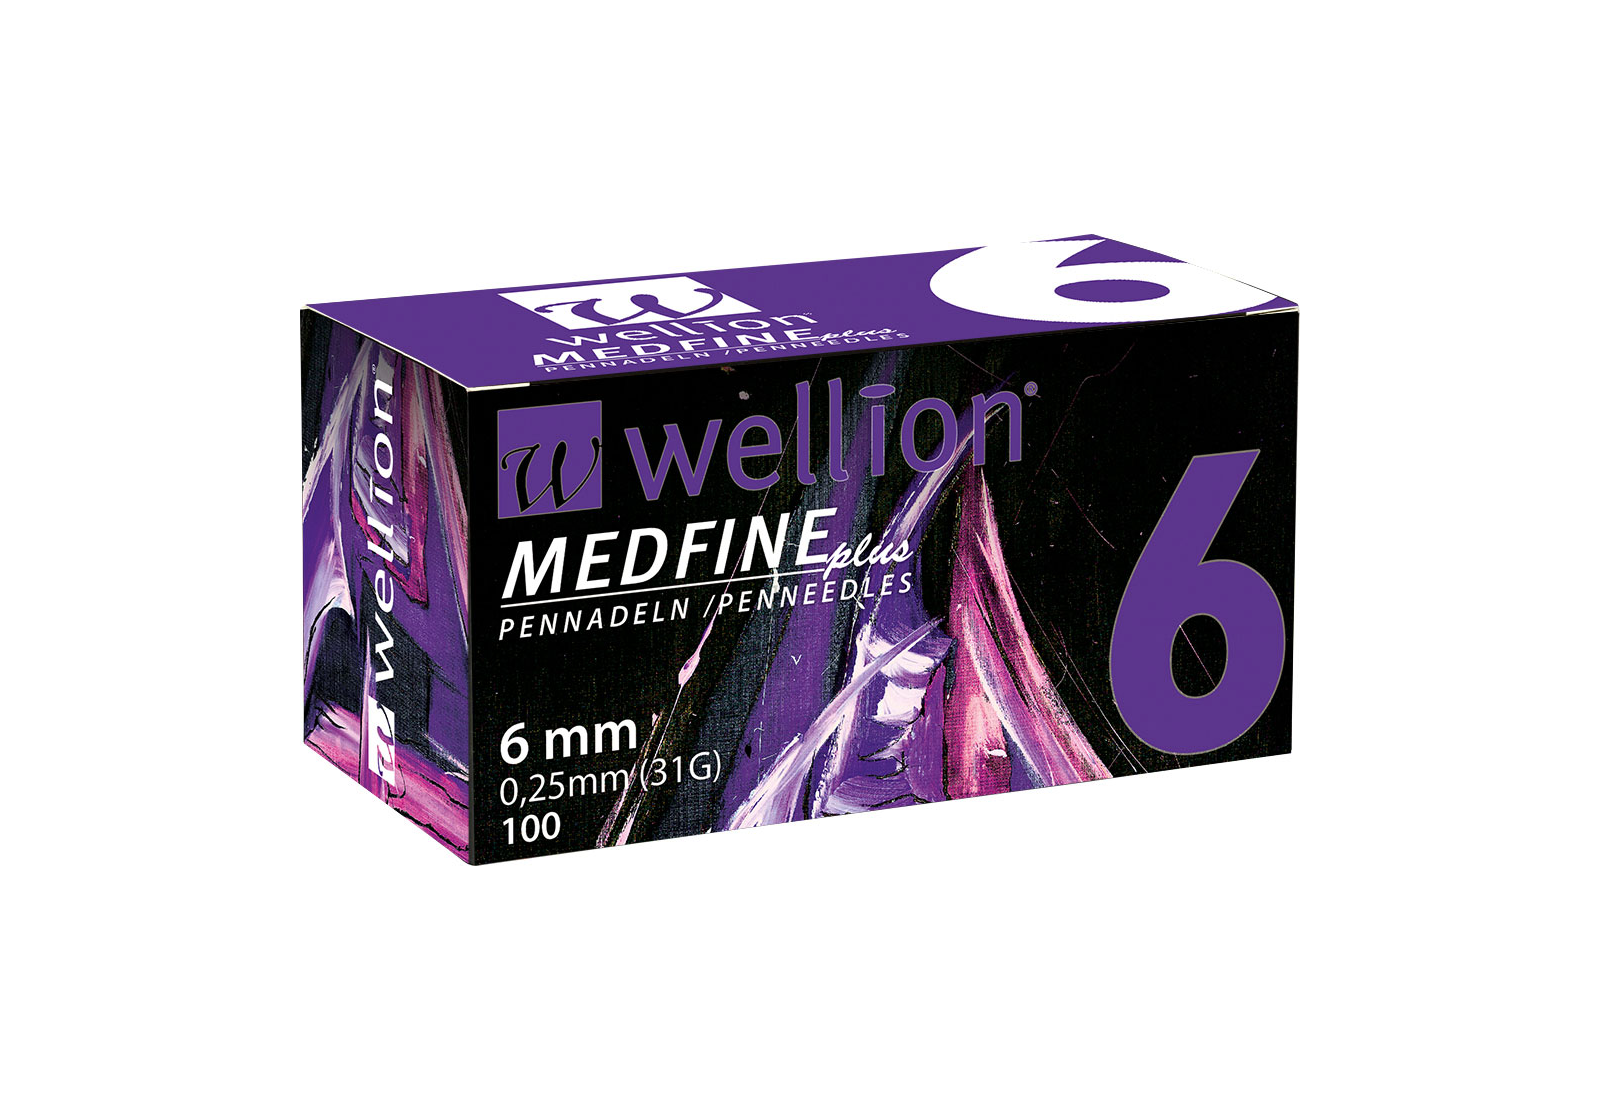 WELL106 Wellion MEDFINE plus Pennadeln, 6 mm, 100 Stück